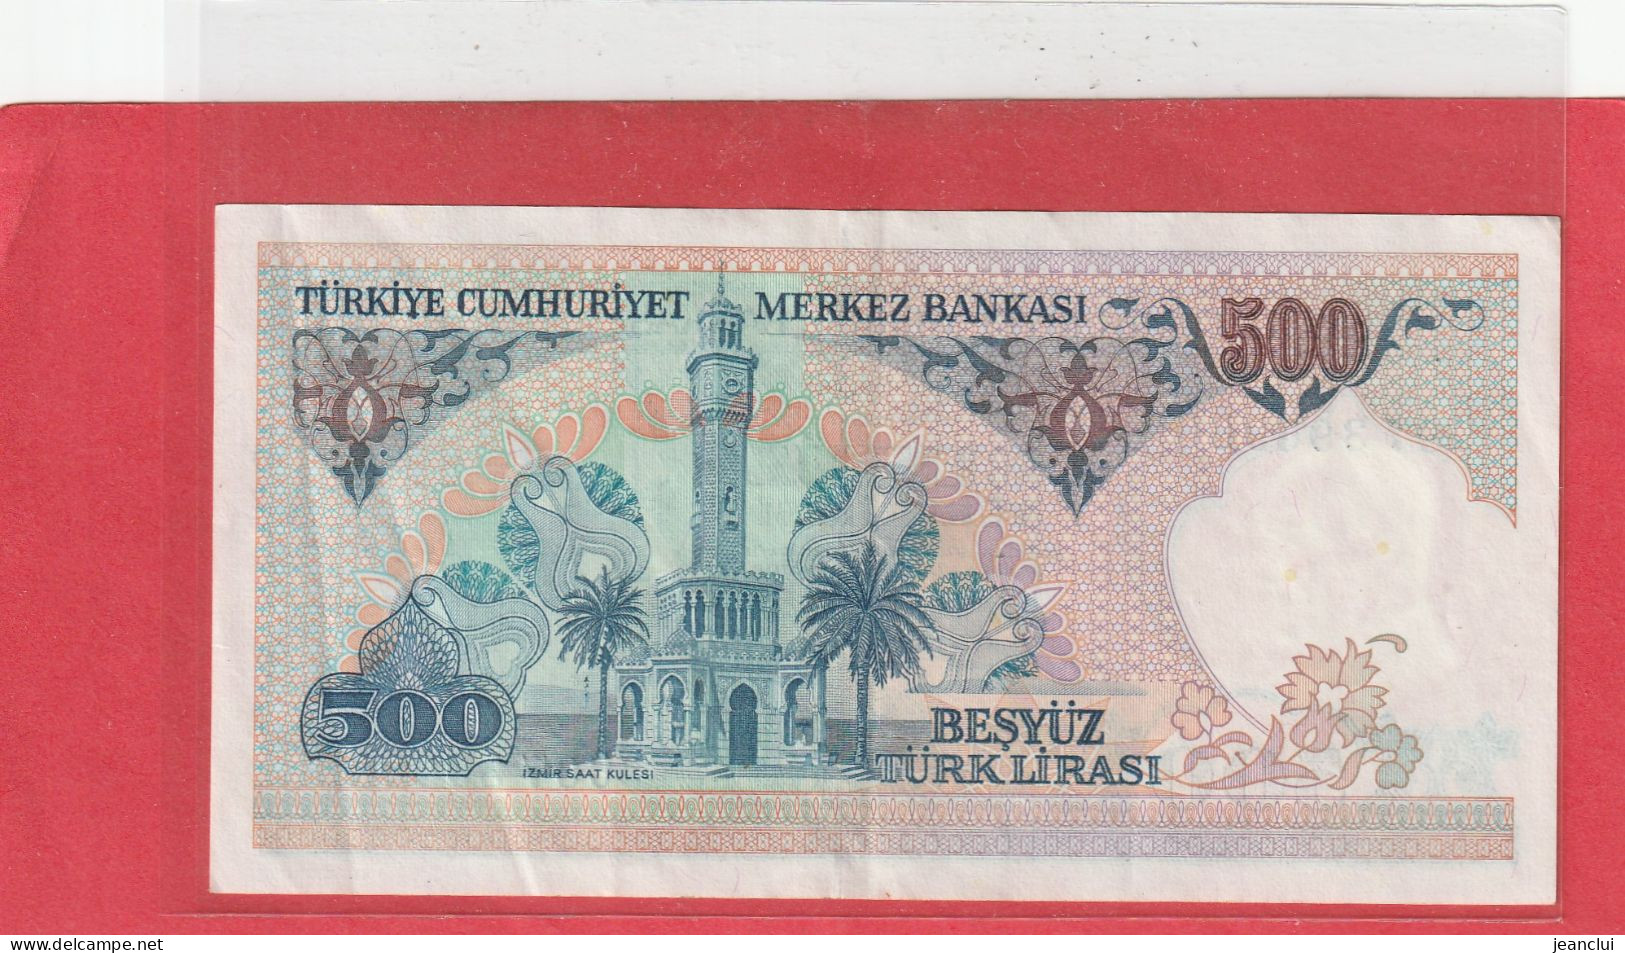 TURKIYE CUMHURIYET MERKEZ BANKASI . 500 LIRA . 14 OCAK 1970  . N°  C 07396966 .  2 SCANNES  .  BEL ETAT - Turquie